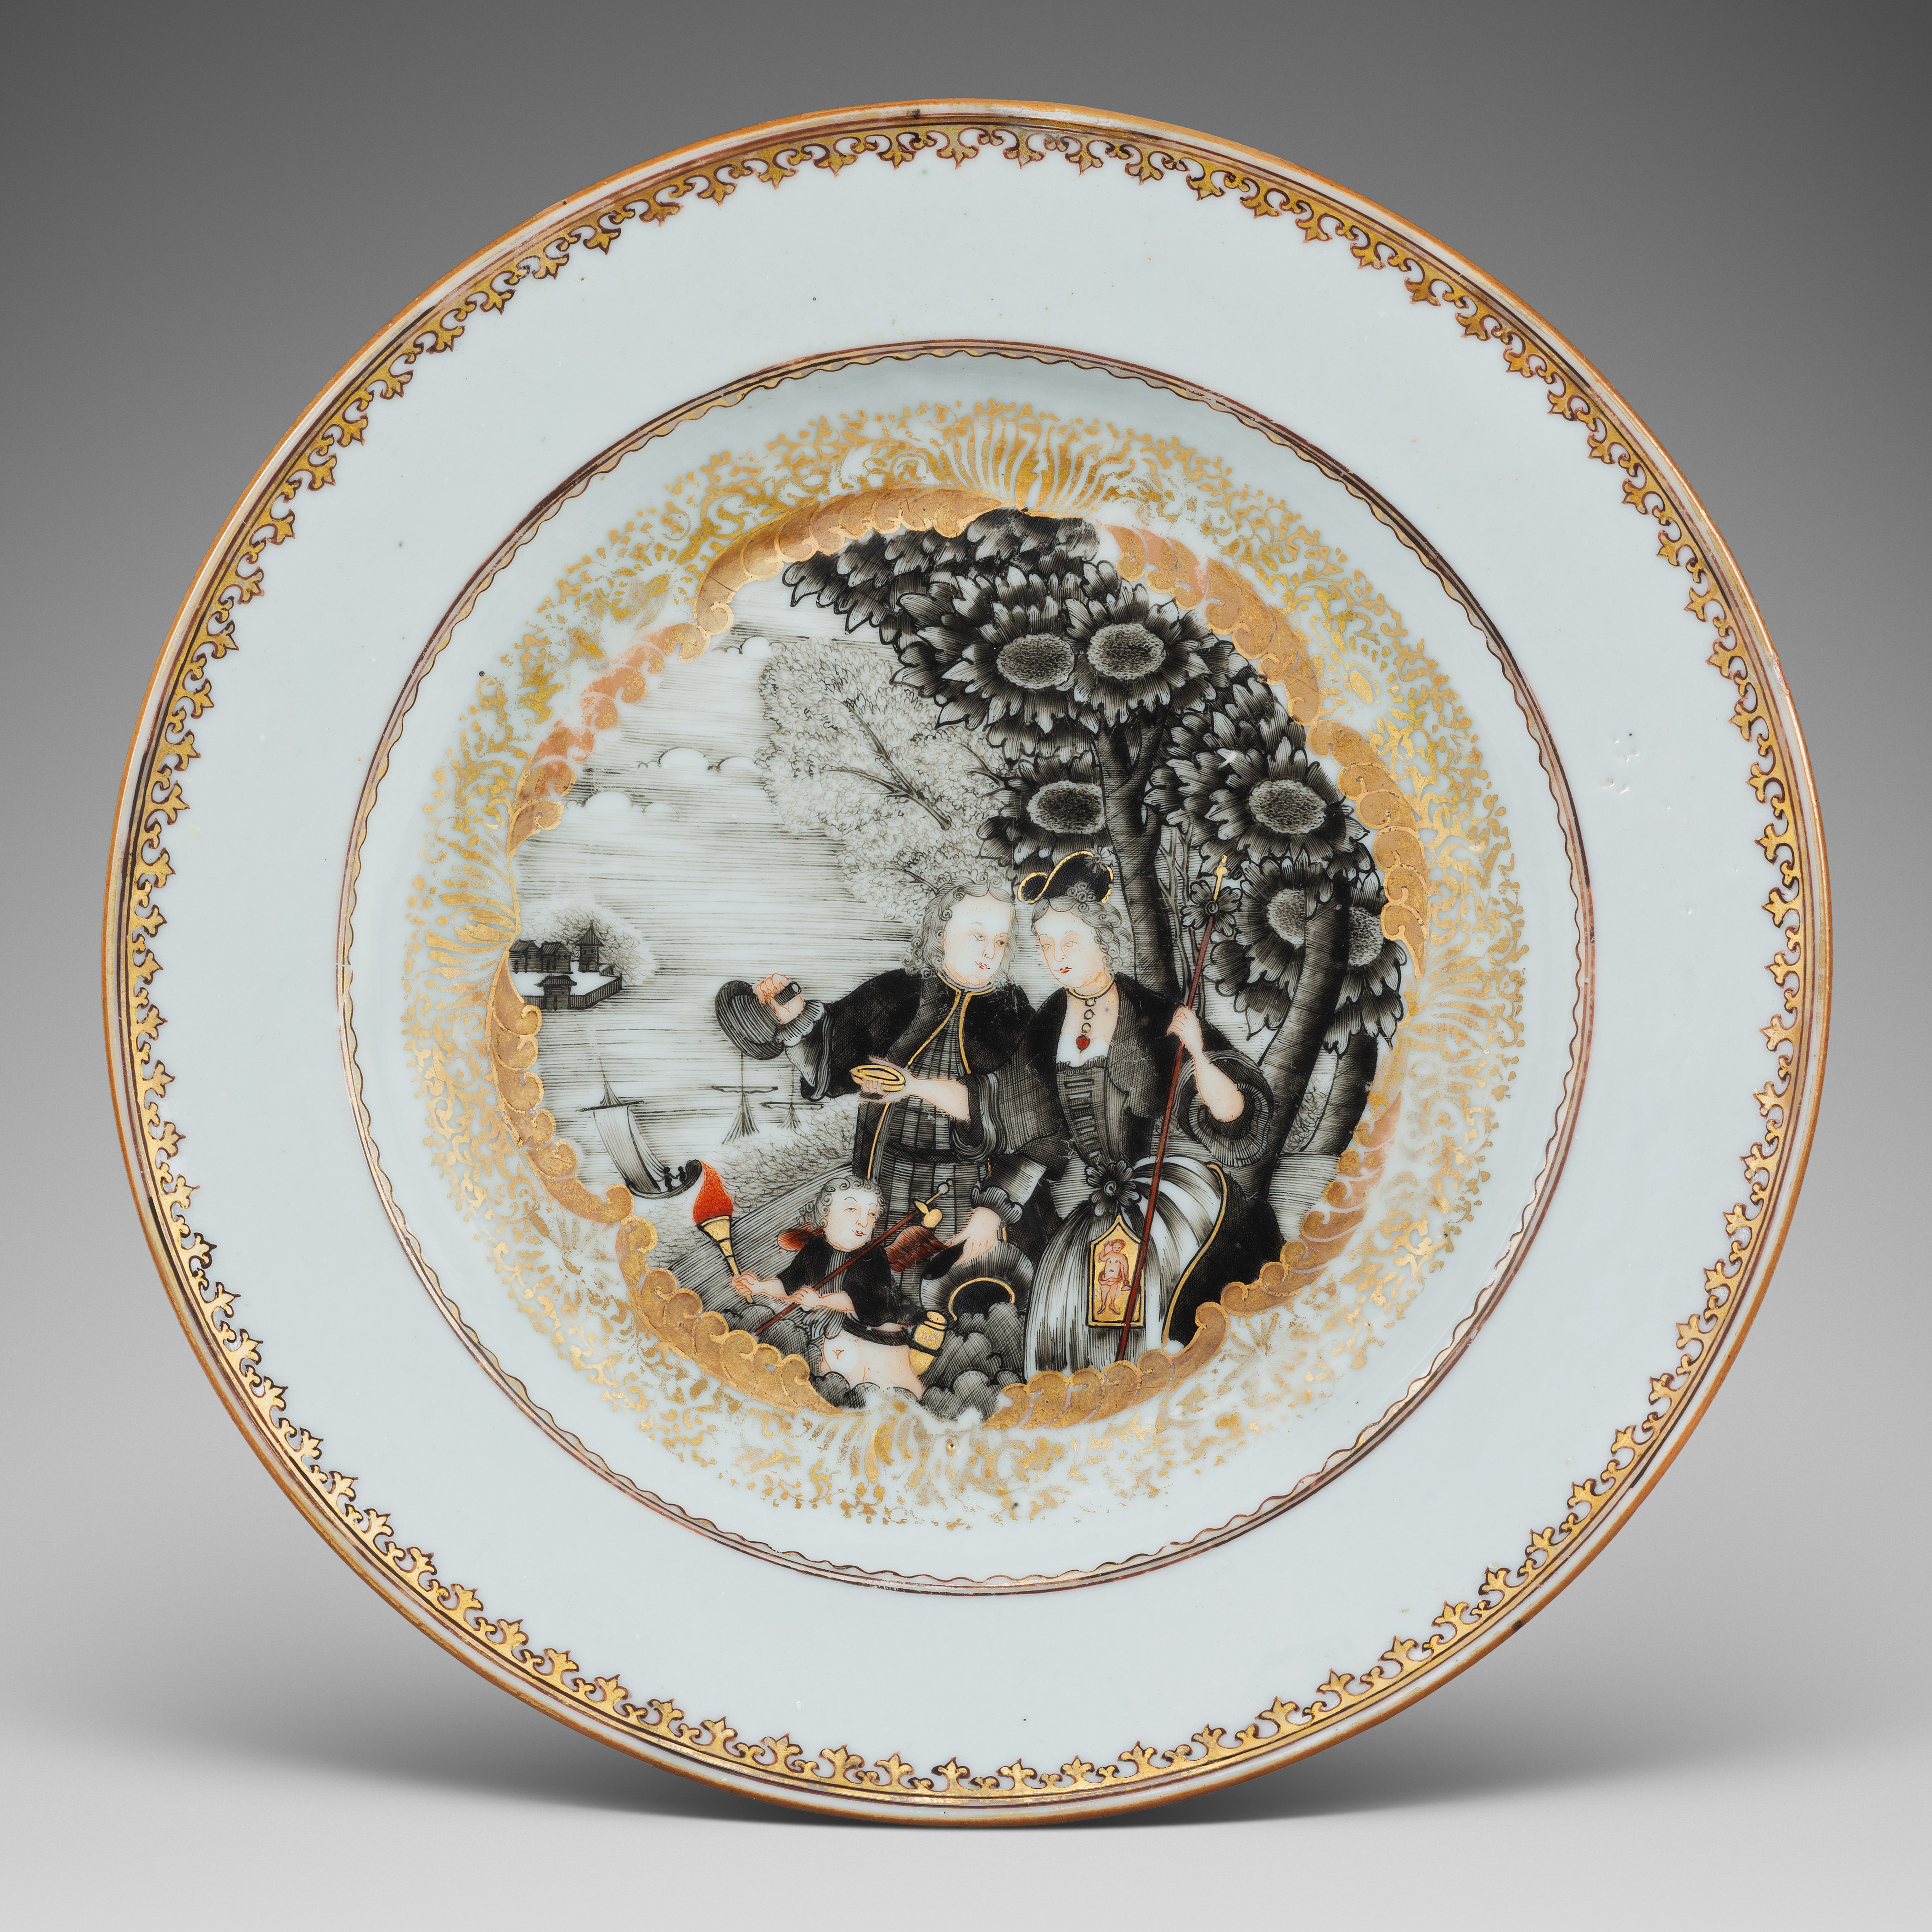 Porcelaine Qianlong period (1736-1795), circa 1750, Chine